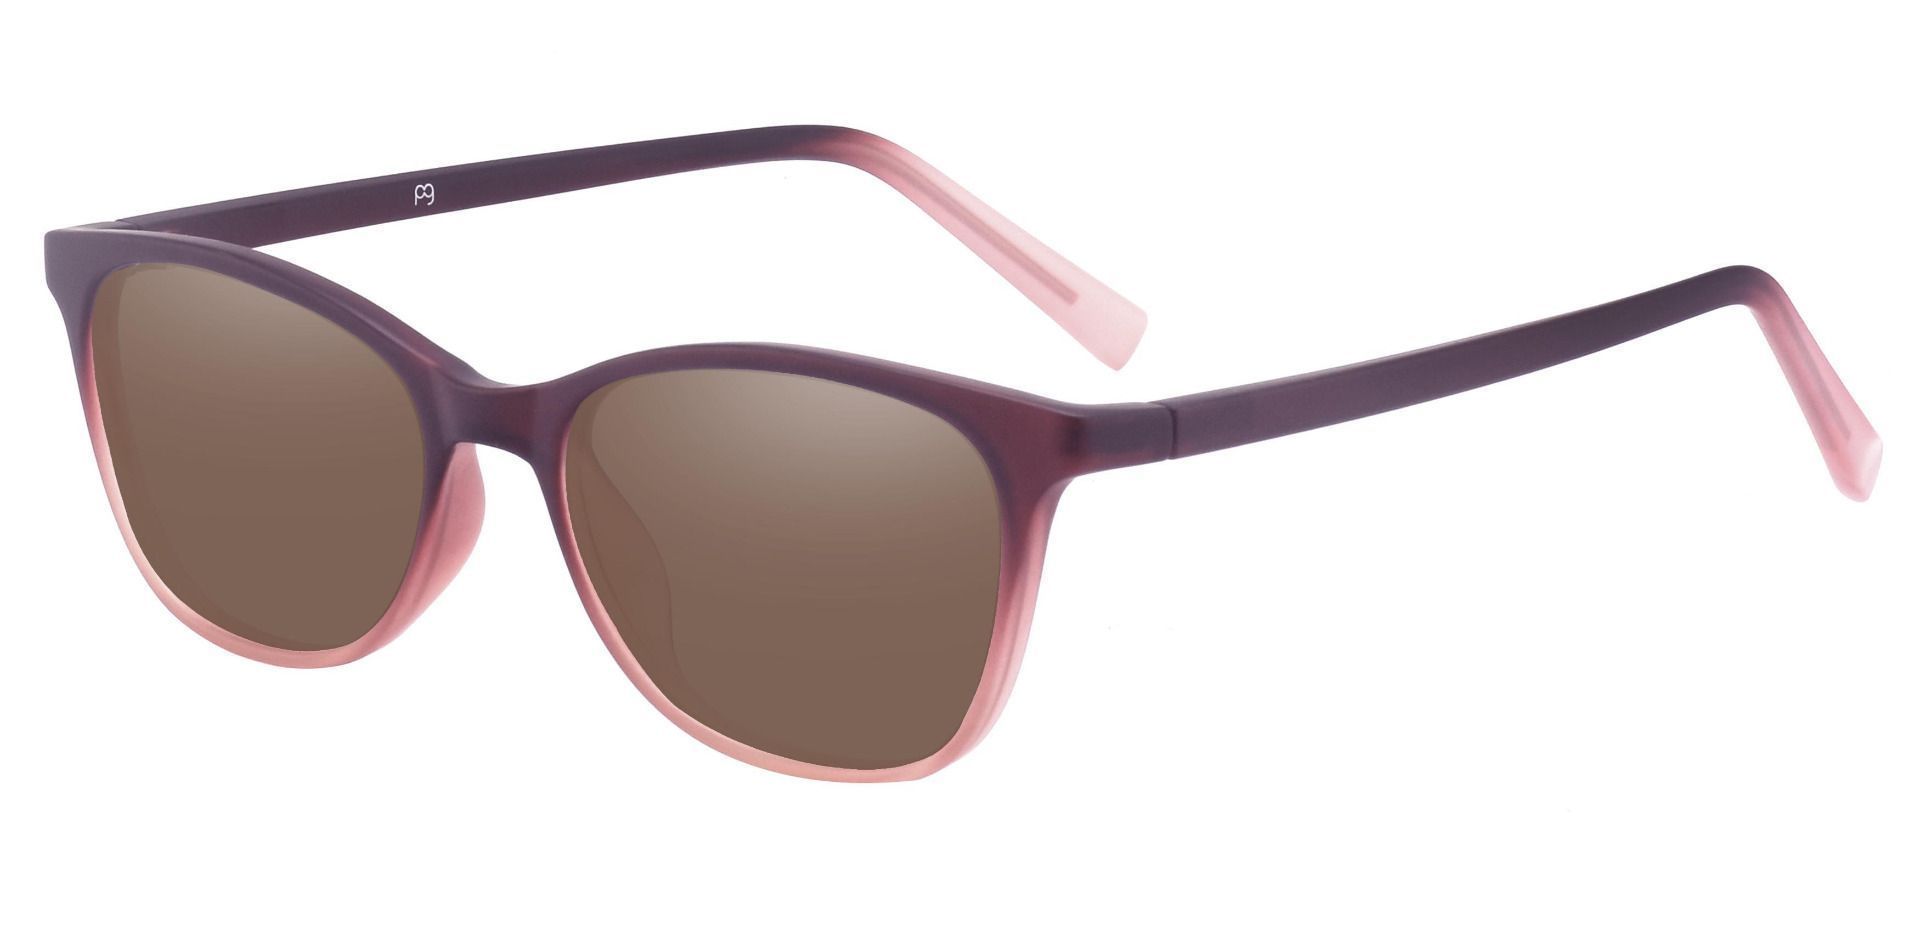 Sasha Classic Square Prescription Sunglasses - Red Frame With Brown Lenses